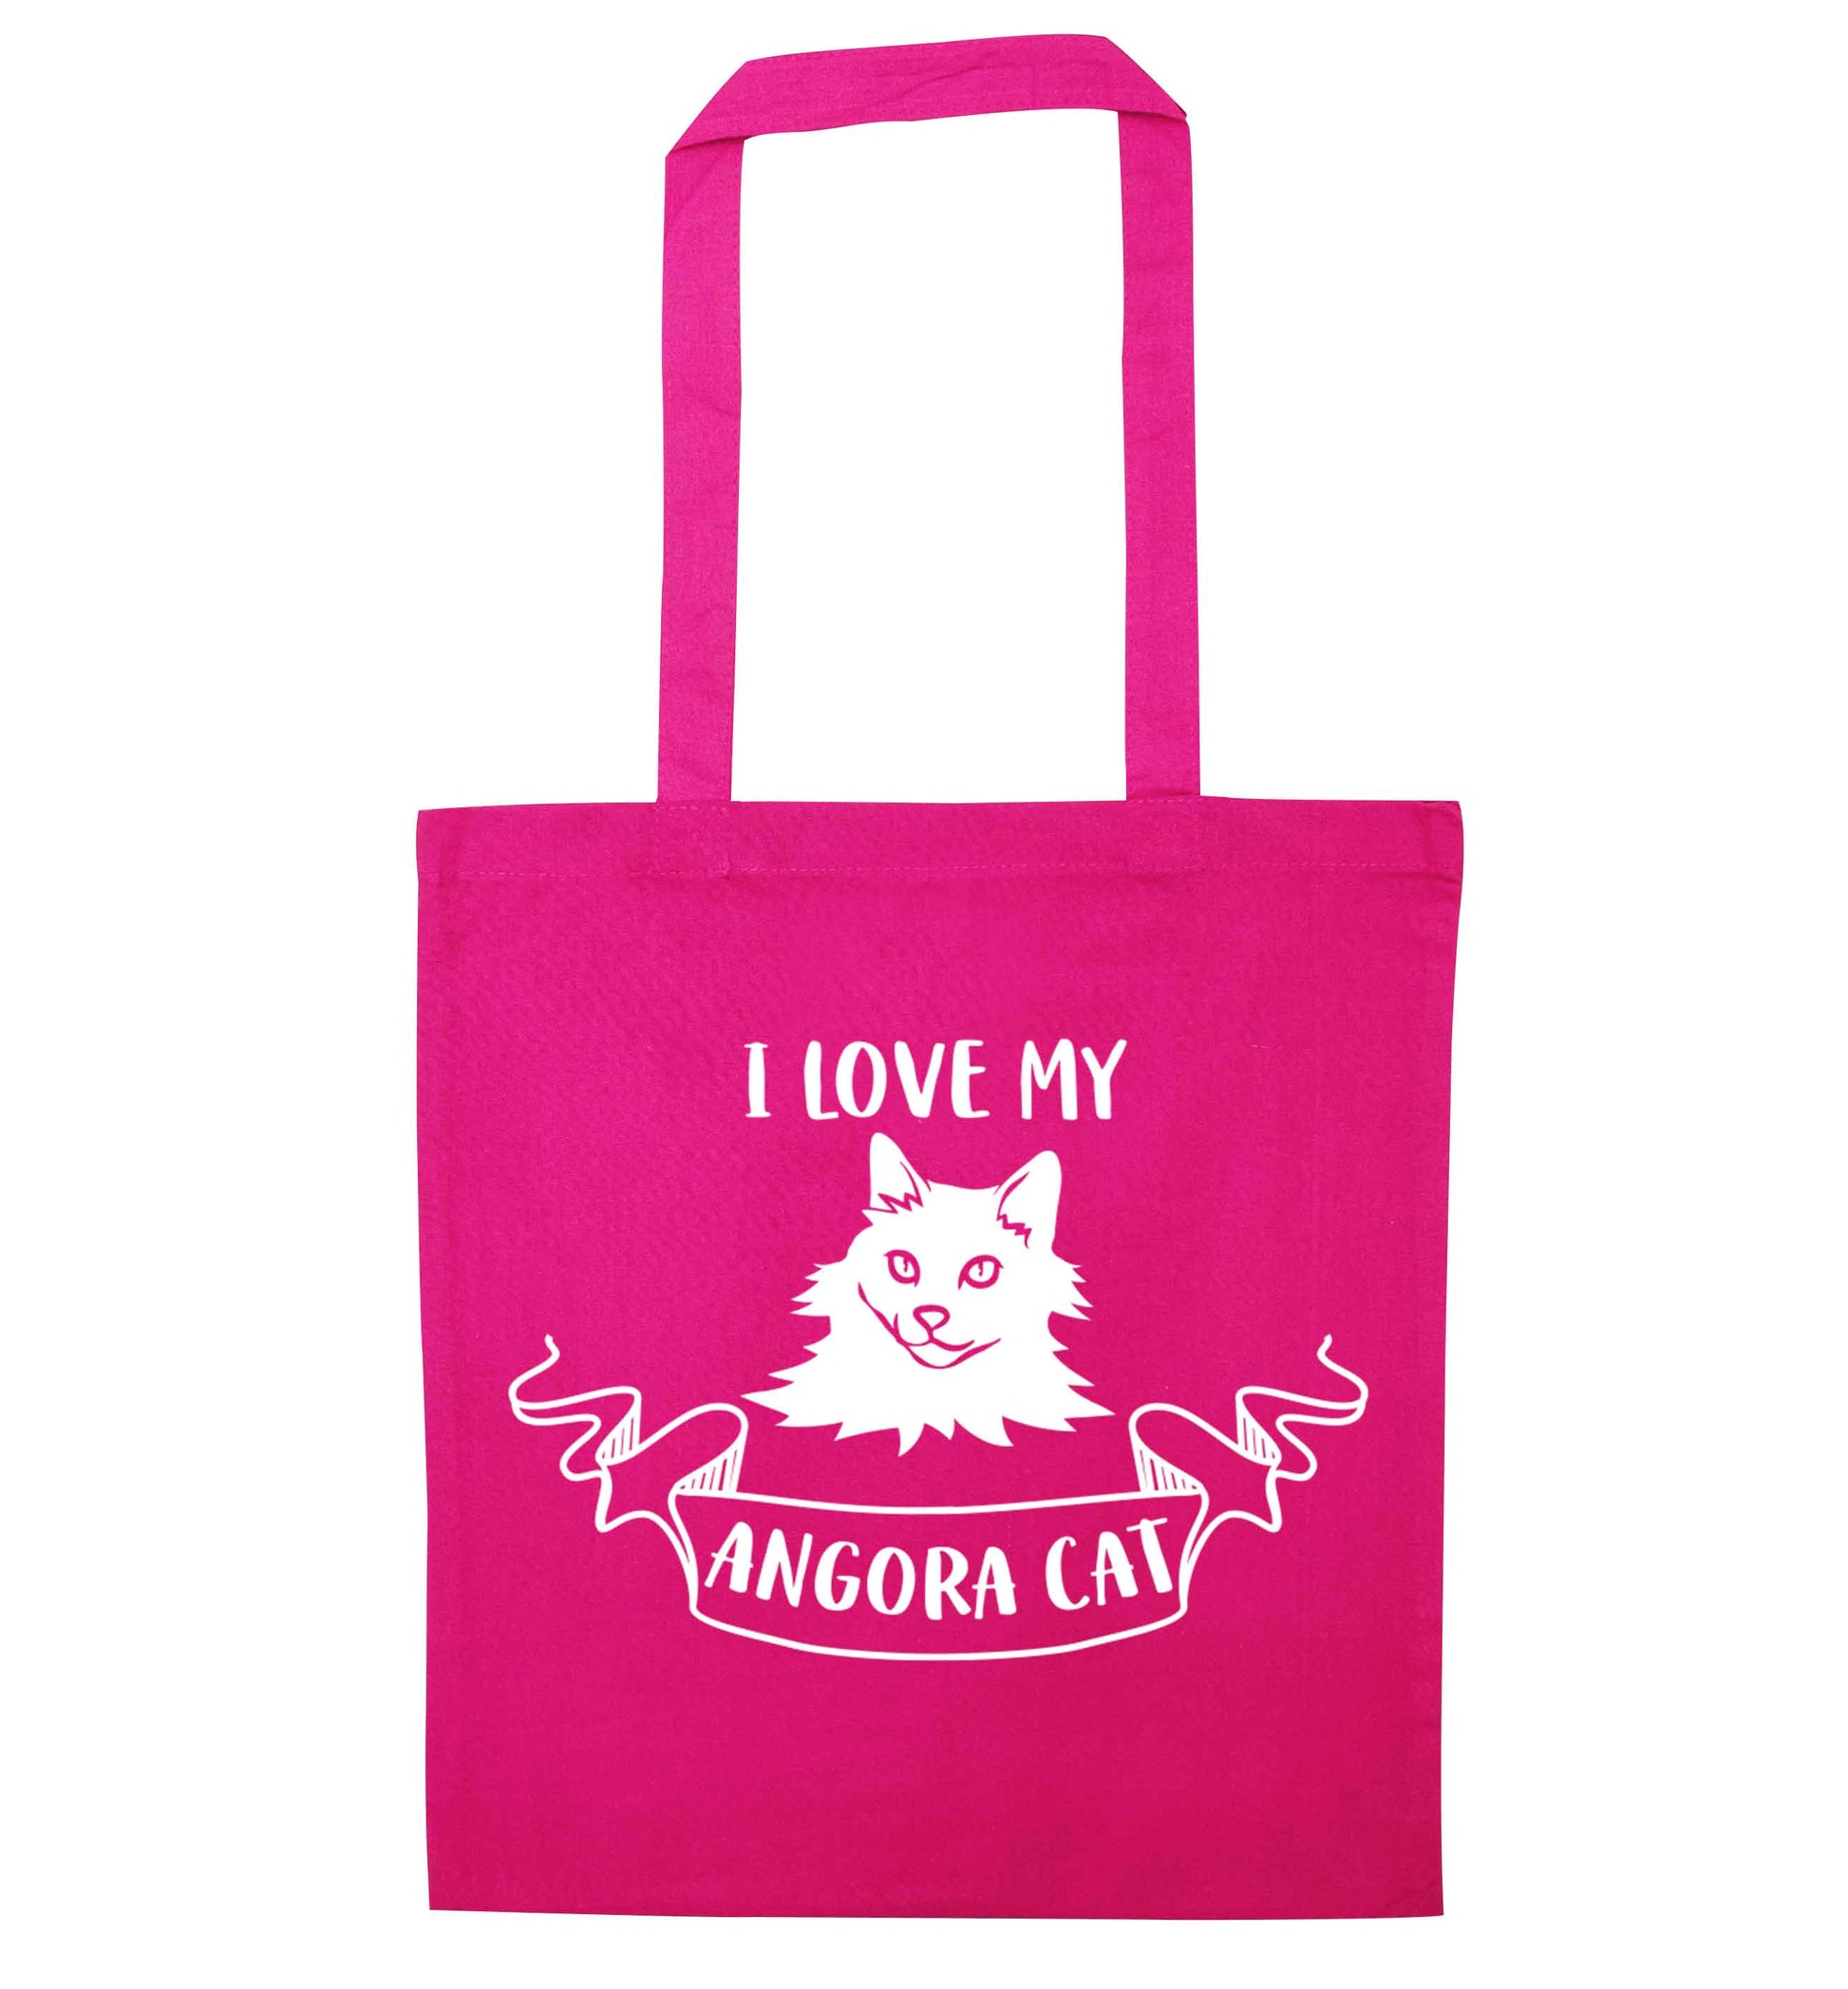 I love my angora cat pink tote bag